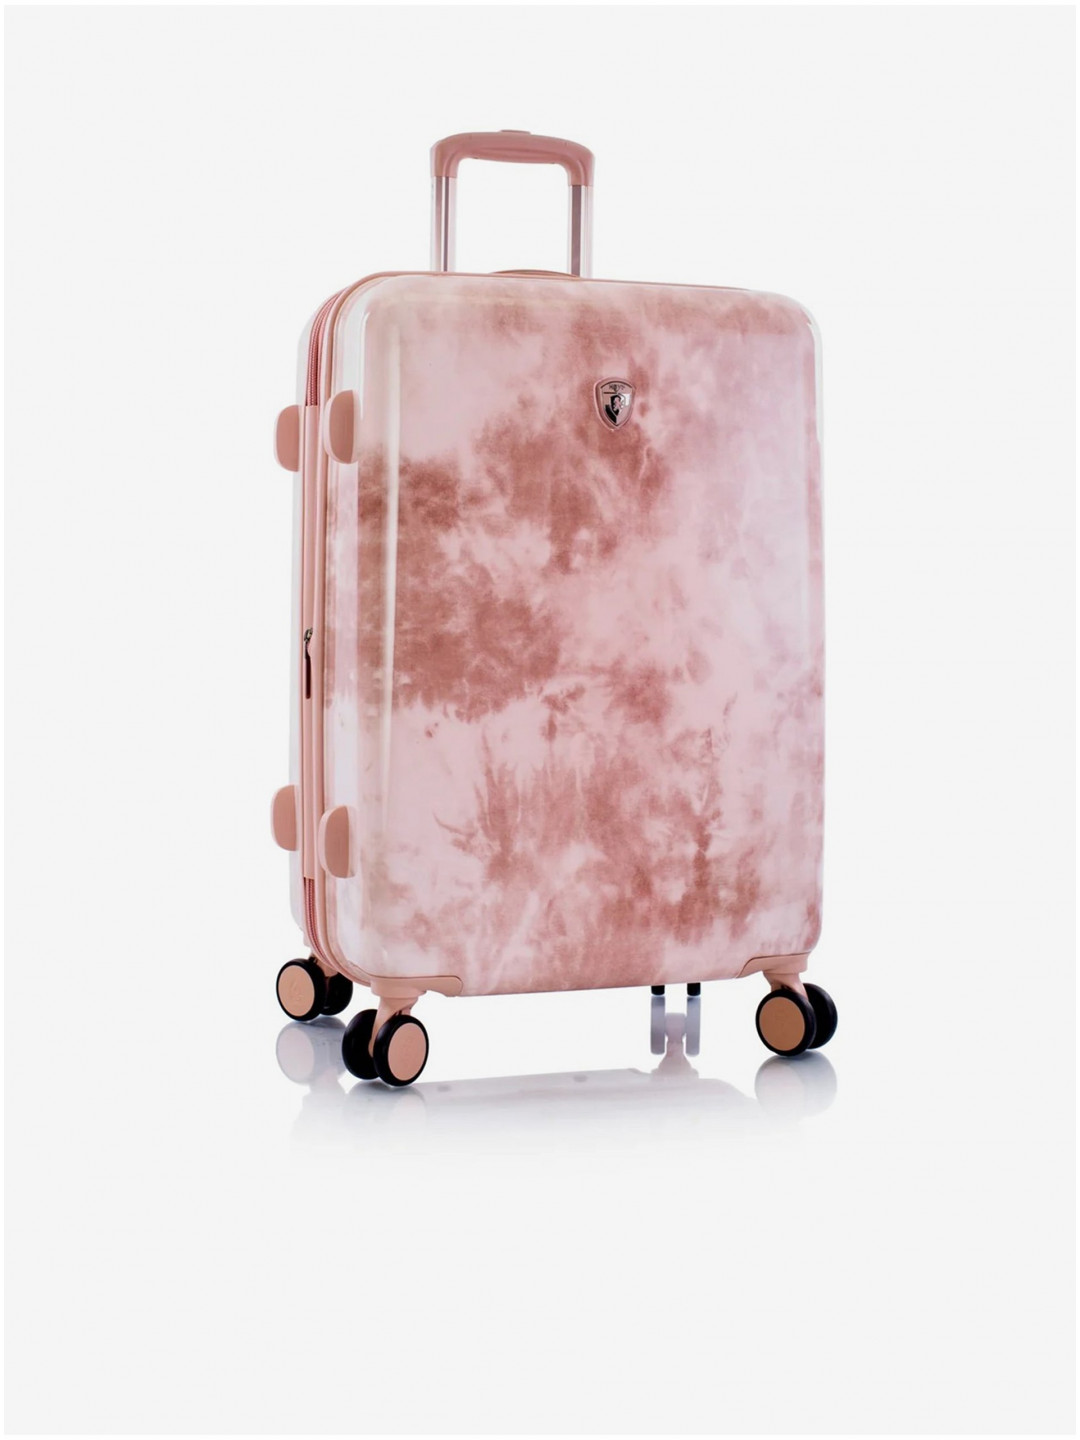 Růžový vzorovaný cestovní kufr Heys Tie-Dye M